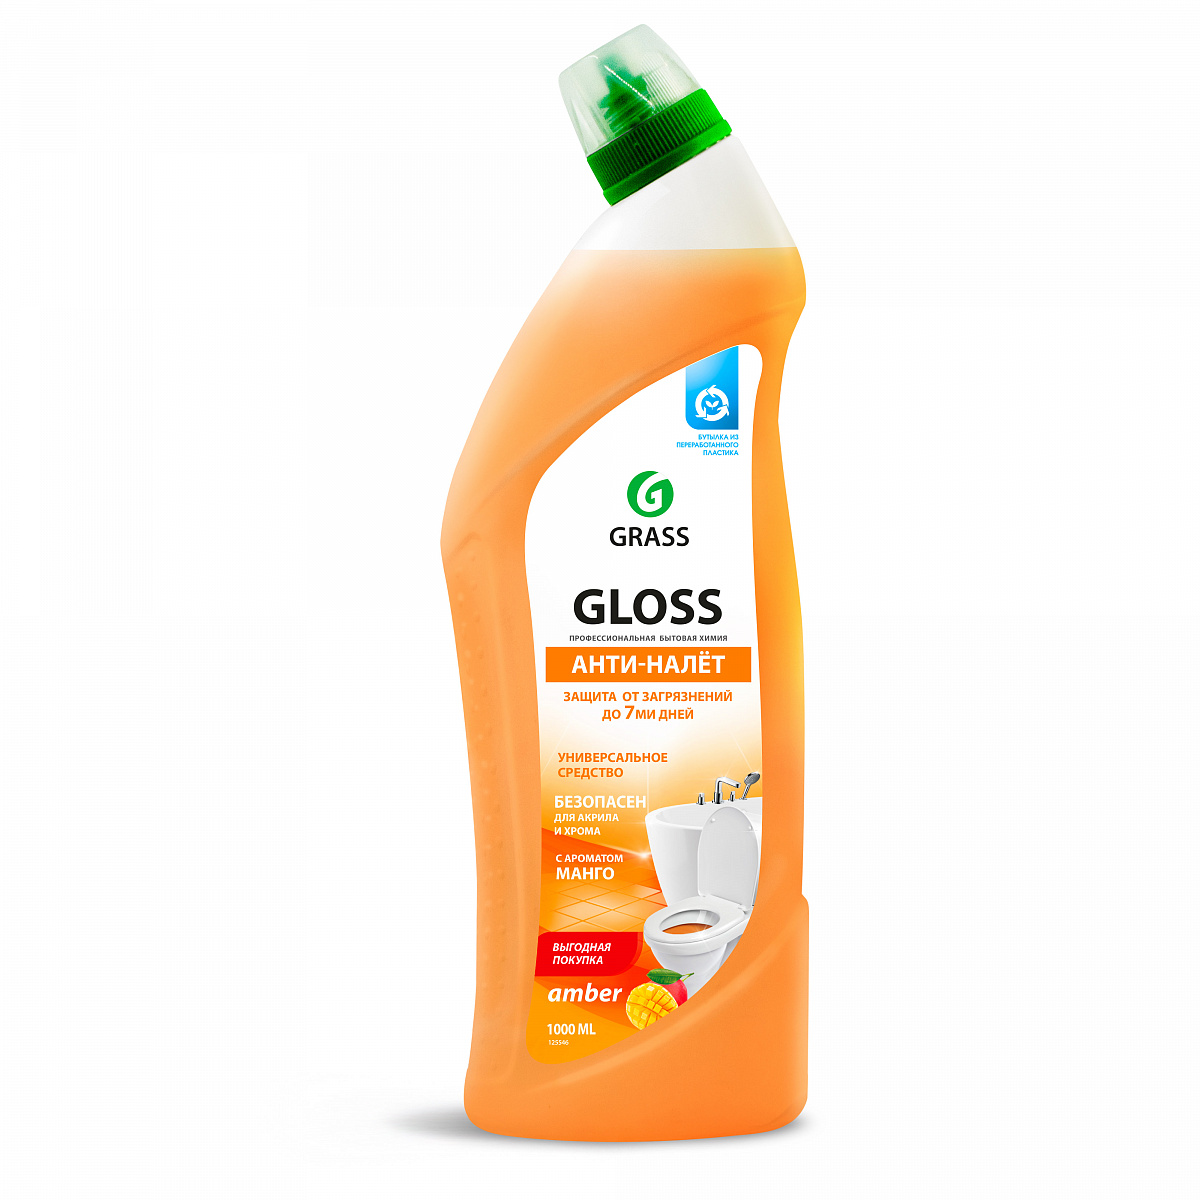 Чистящий гель для ванны и туалета "Gloss amber" (флакон 1 л)